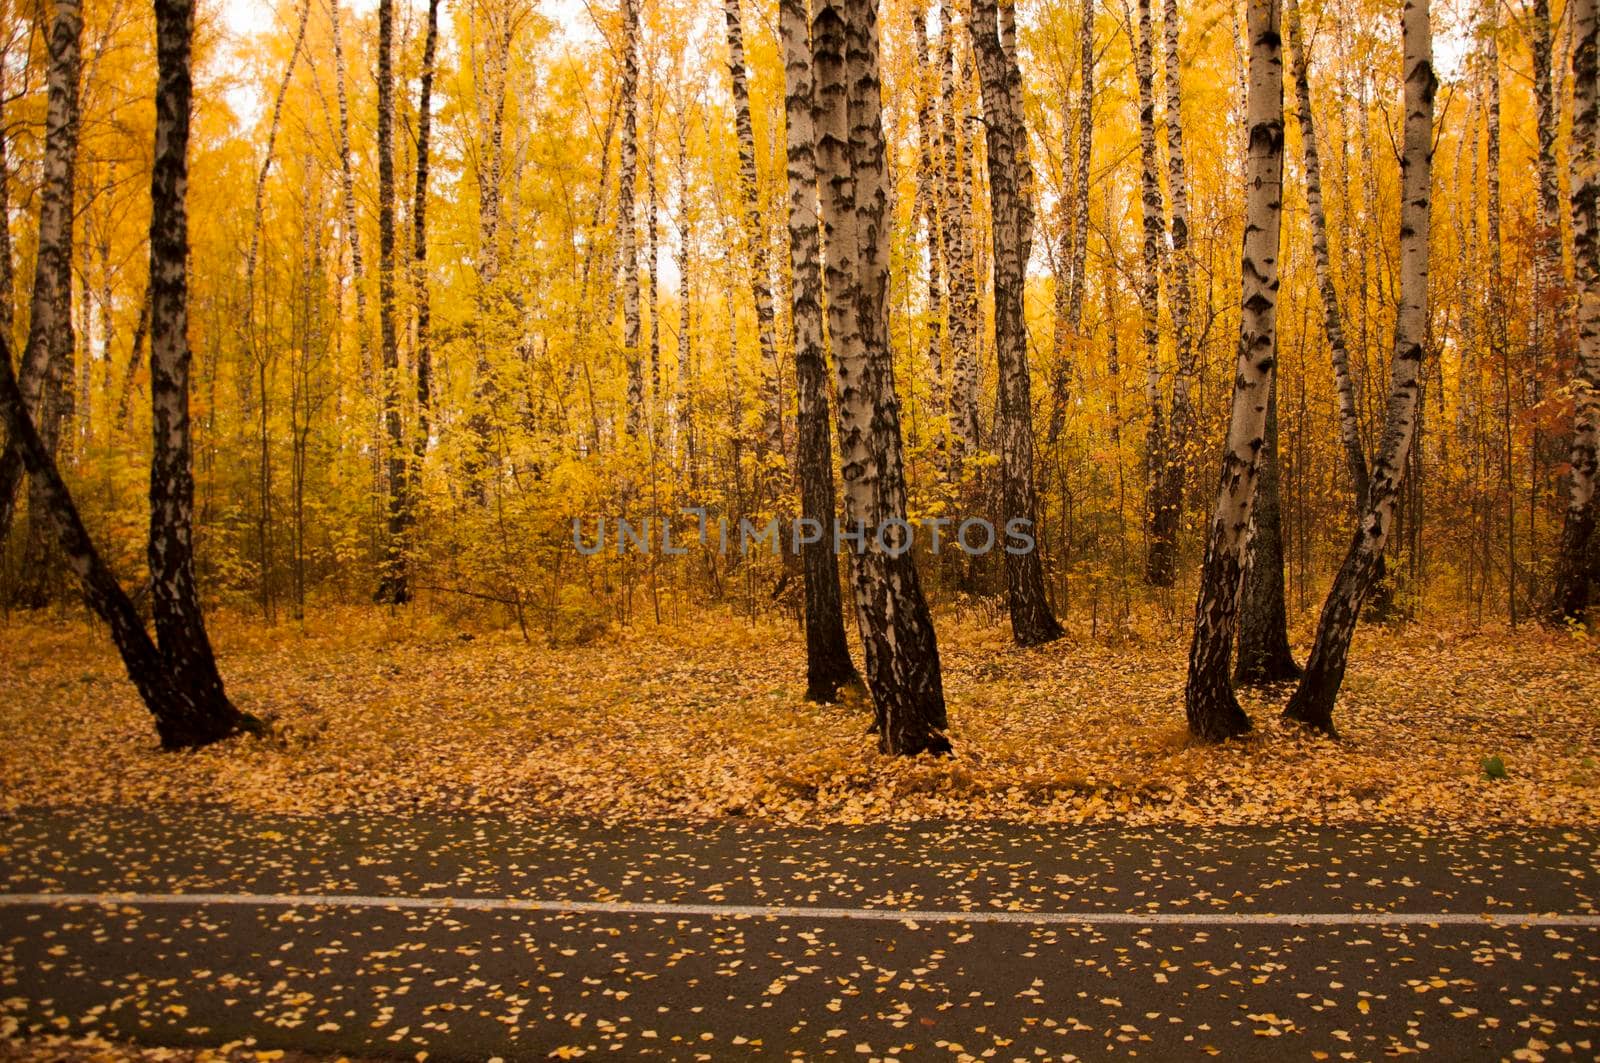 Fallen yellow autumn leaves on the asphalt road in the park Small foliage. Plants. Autumn. Background. Texture. Autumn park. Fallen leaves